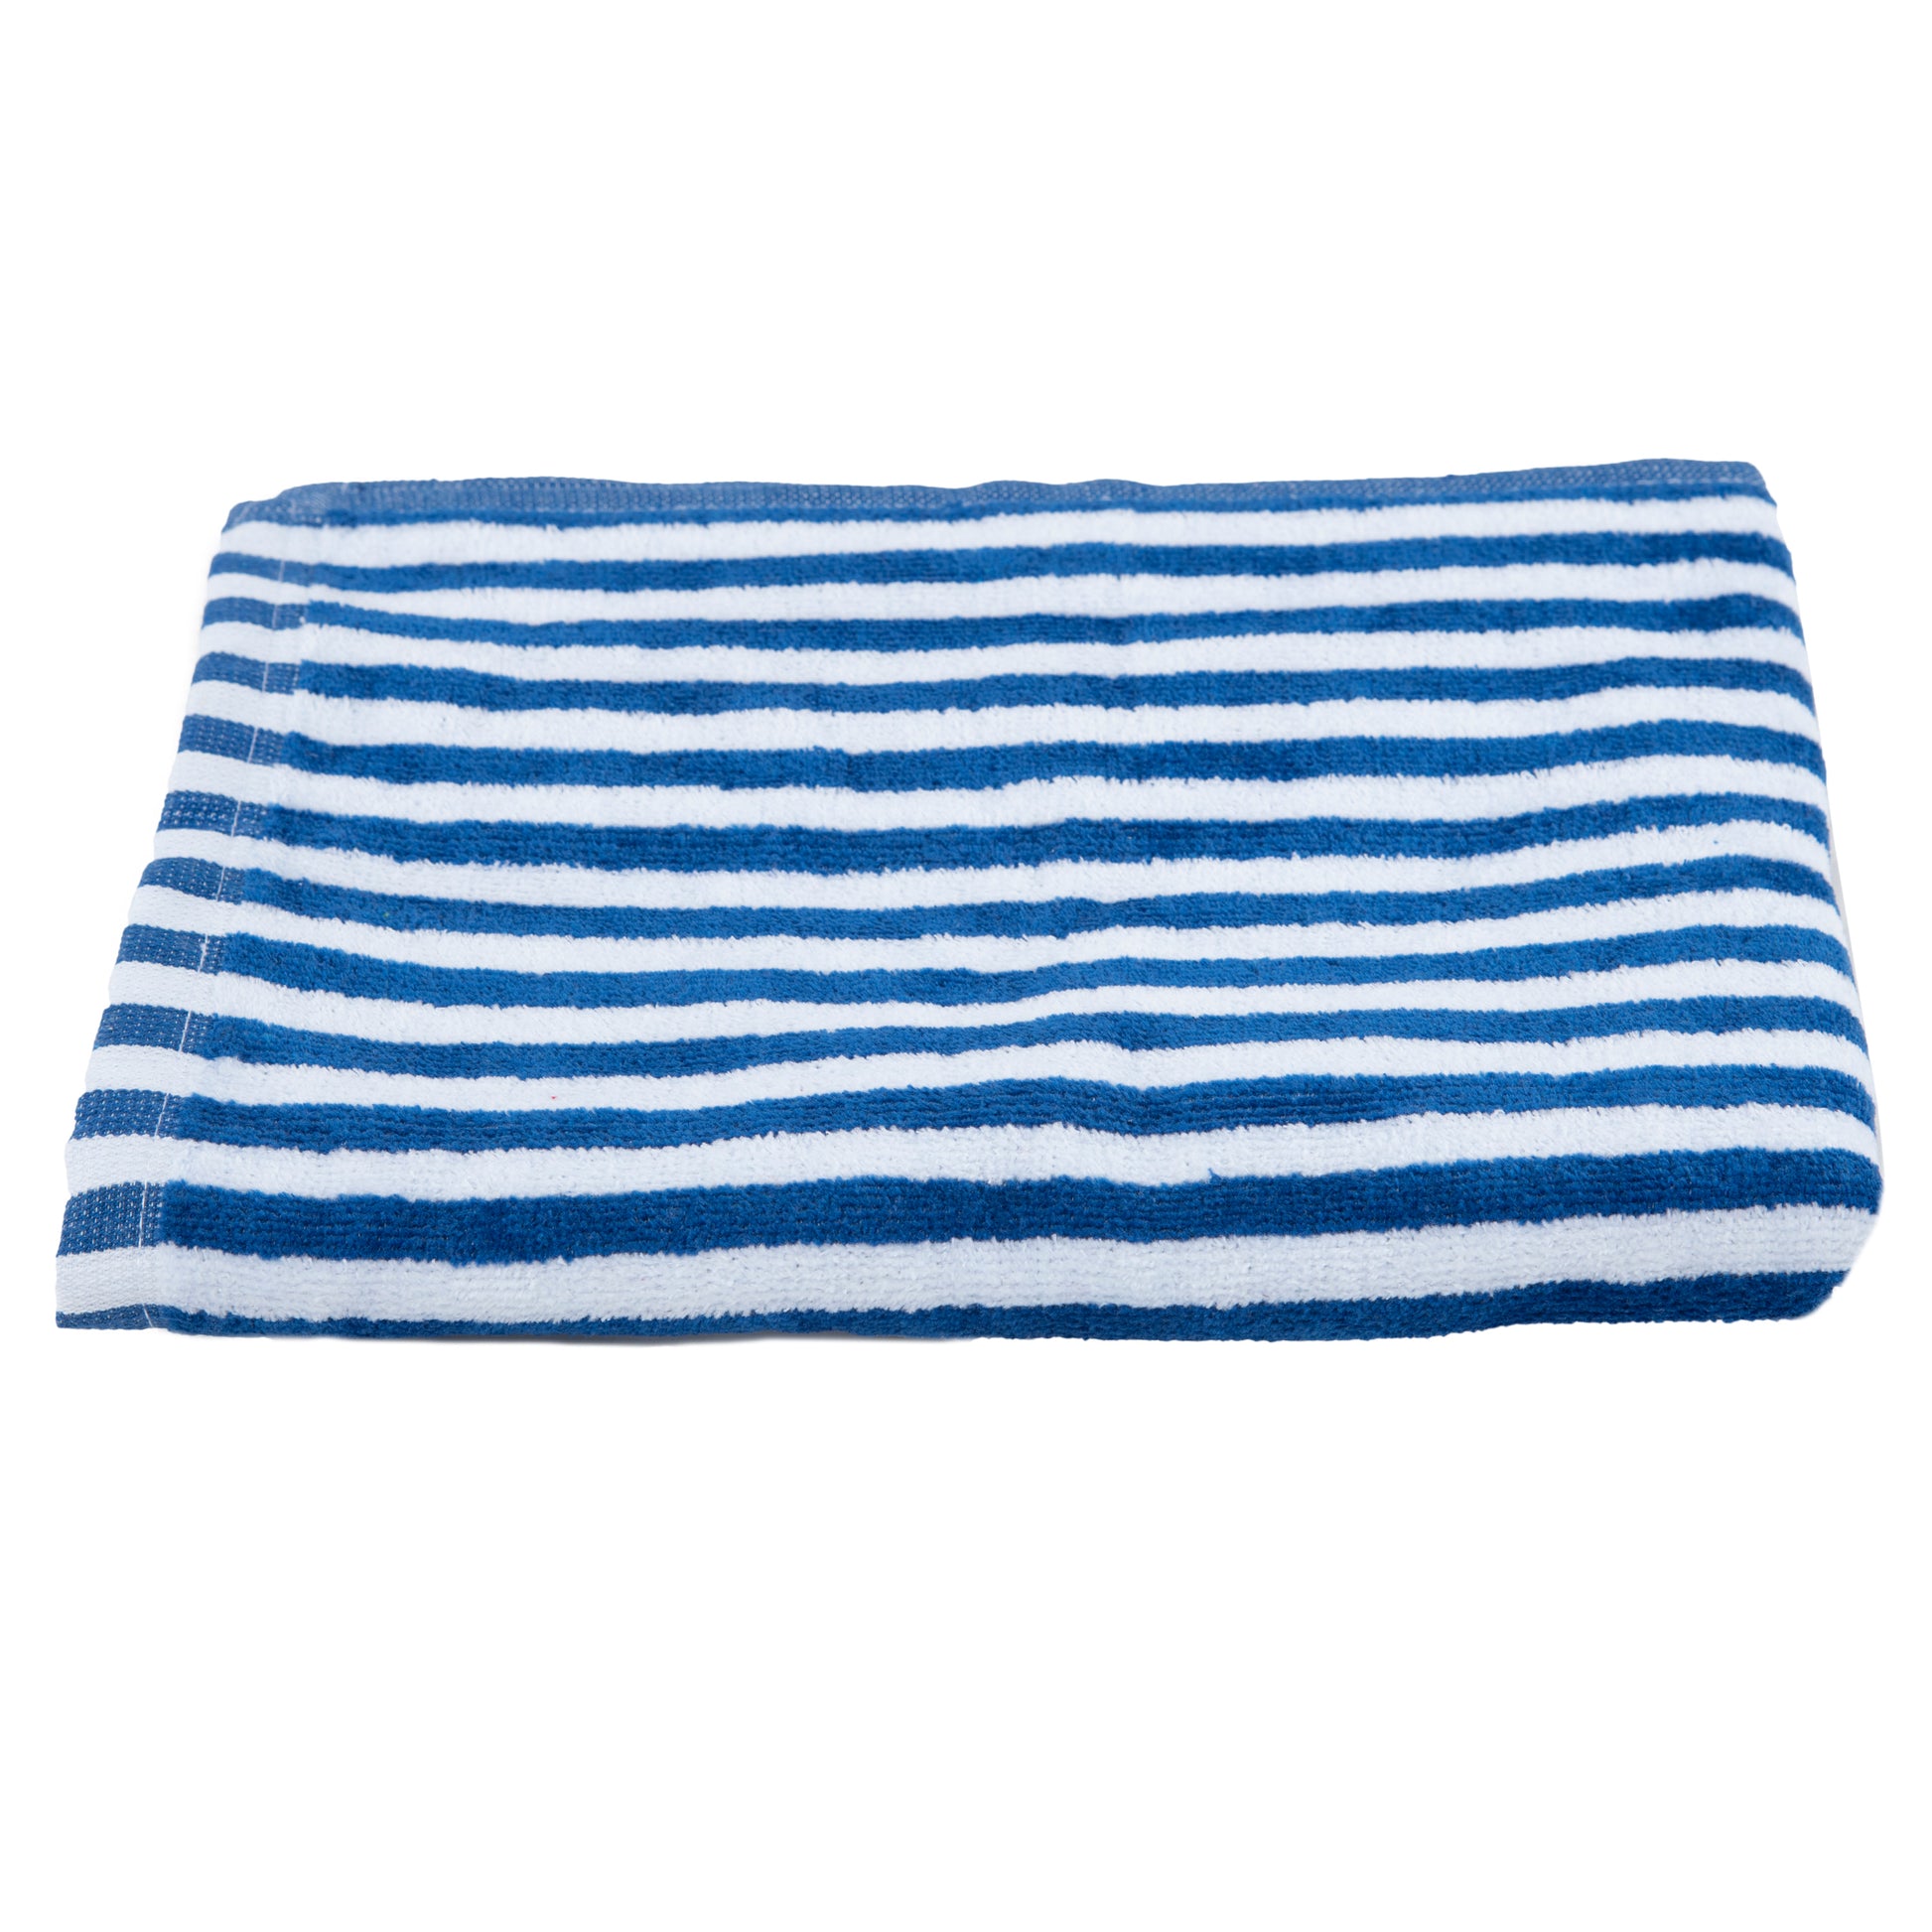 Turkish Bath Premium Cotton Cabana Shering Cabana Shering Stripe Bath and Pool Towel : Blue - SWHF